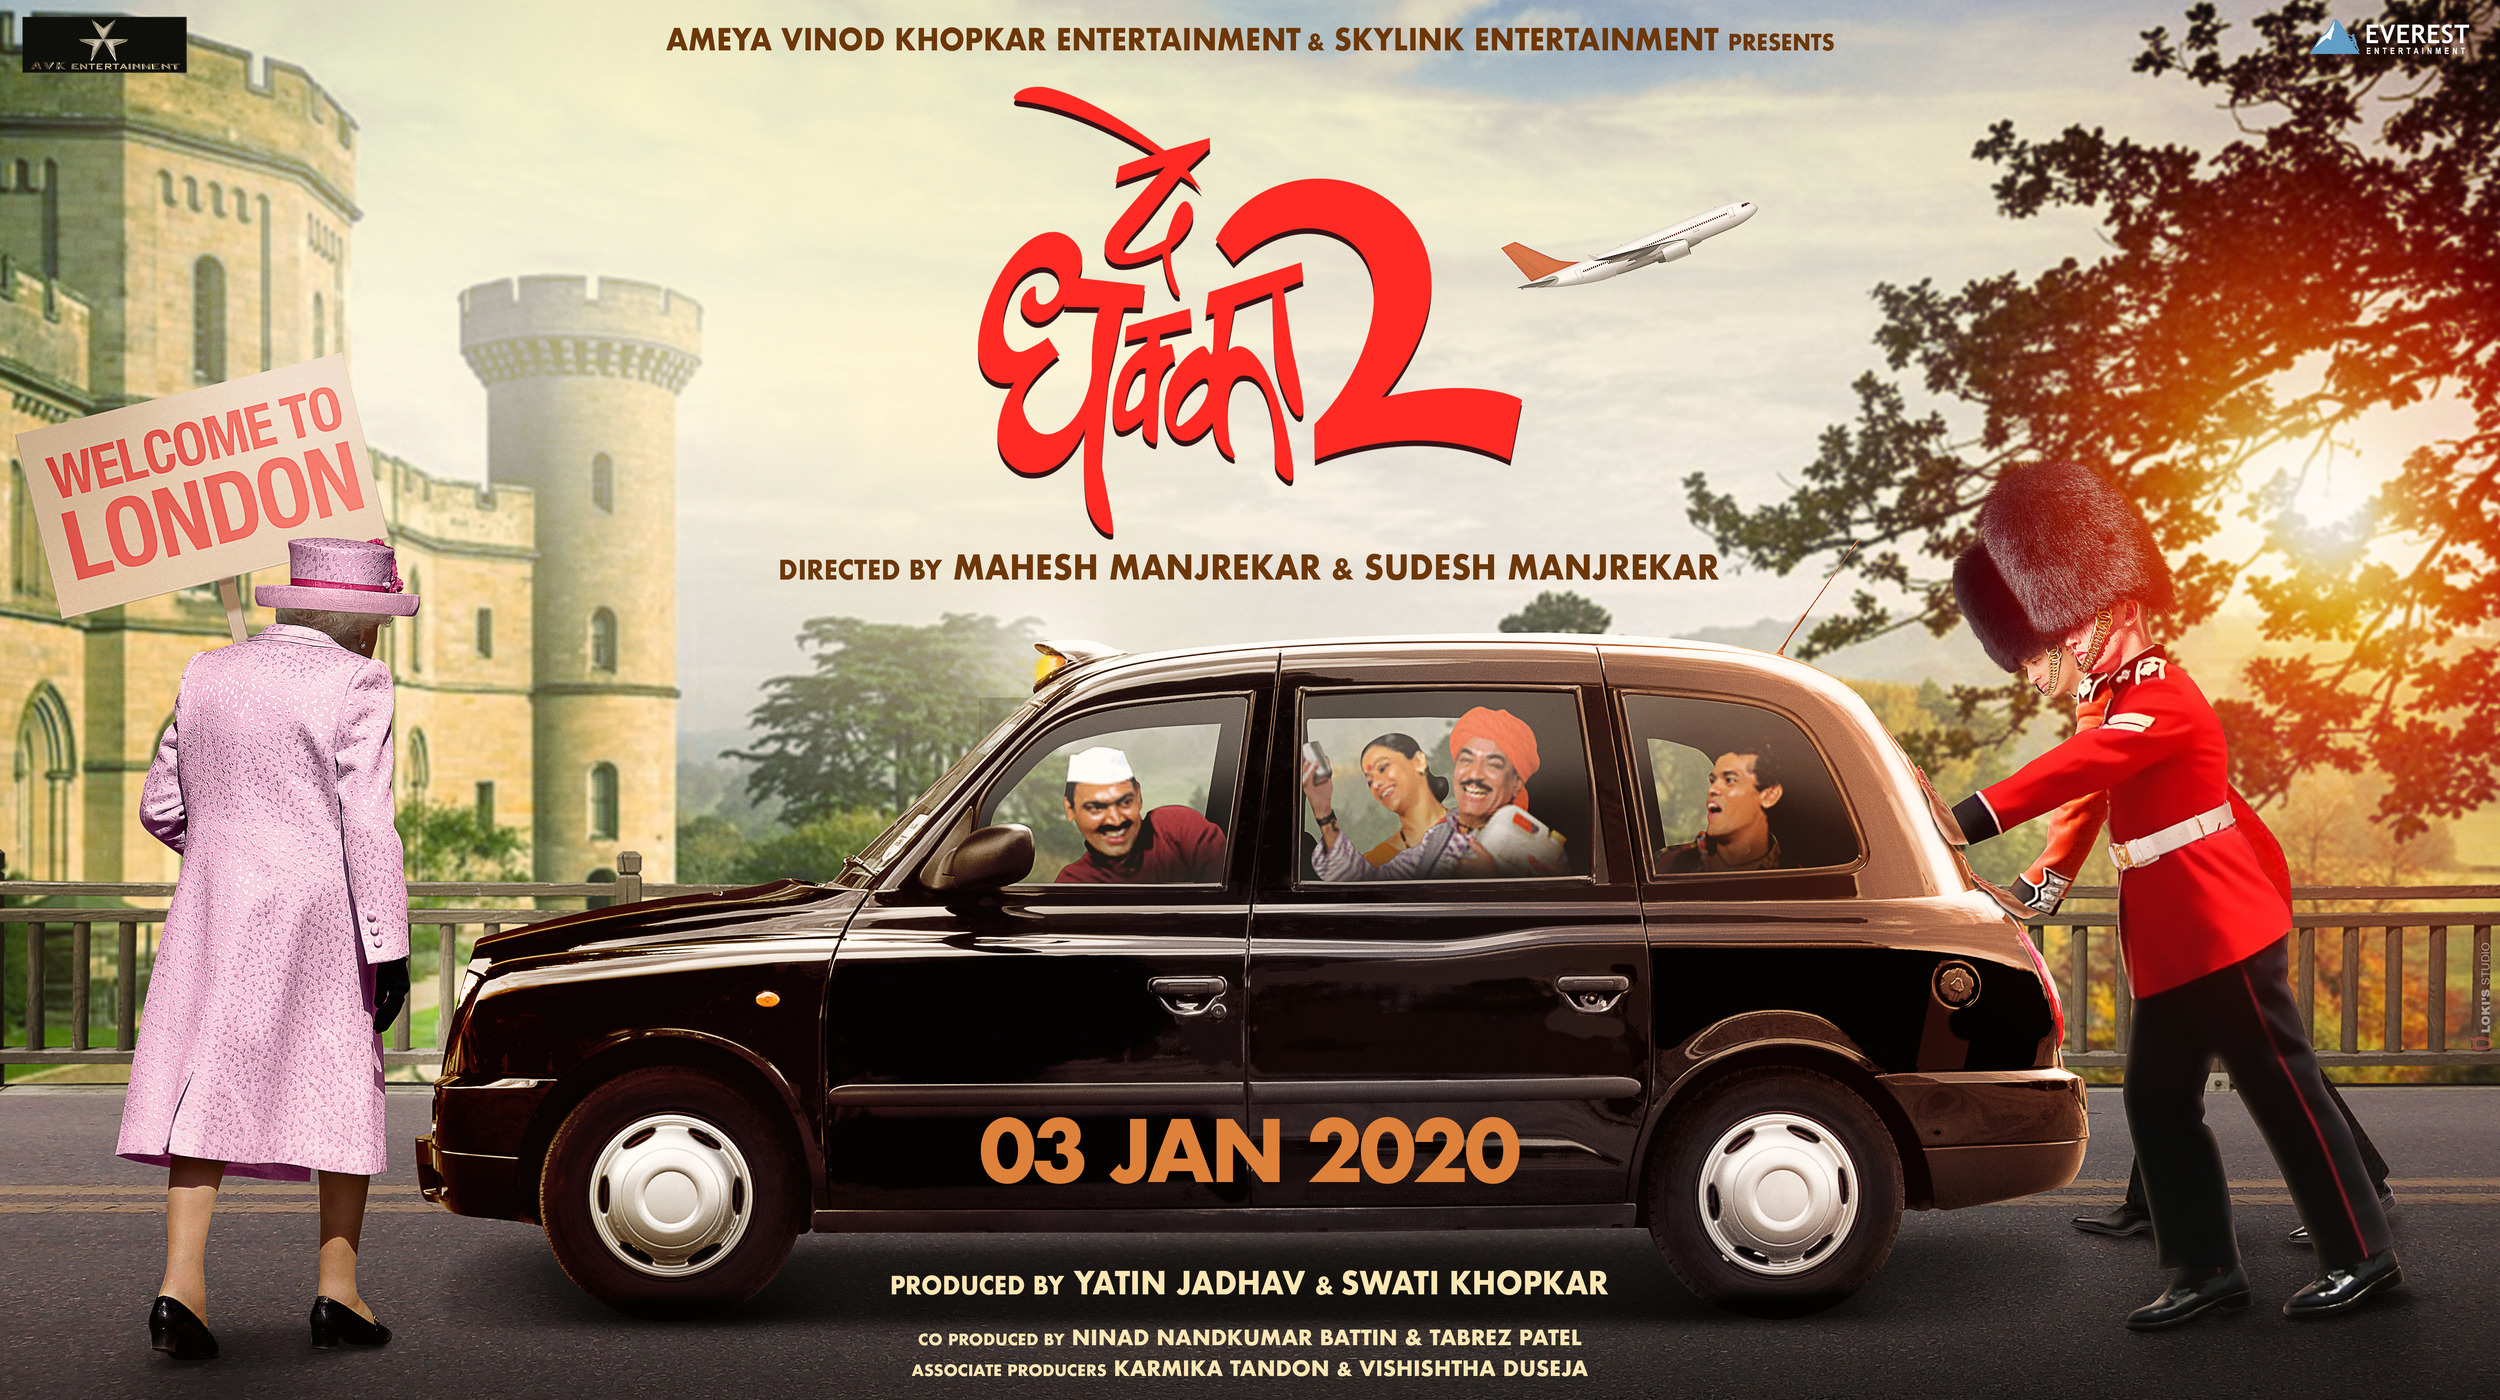 Mega Sized Movie Poster Image for De Dhakka 2 